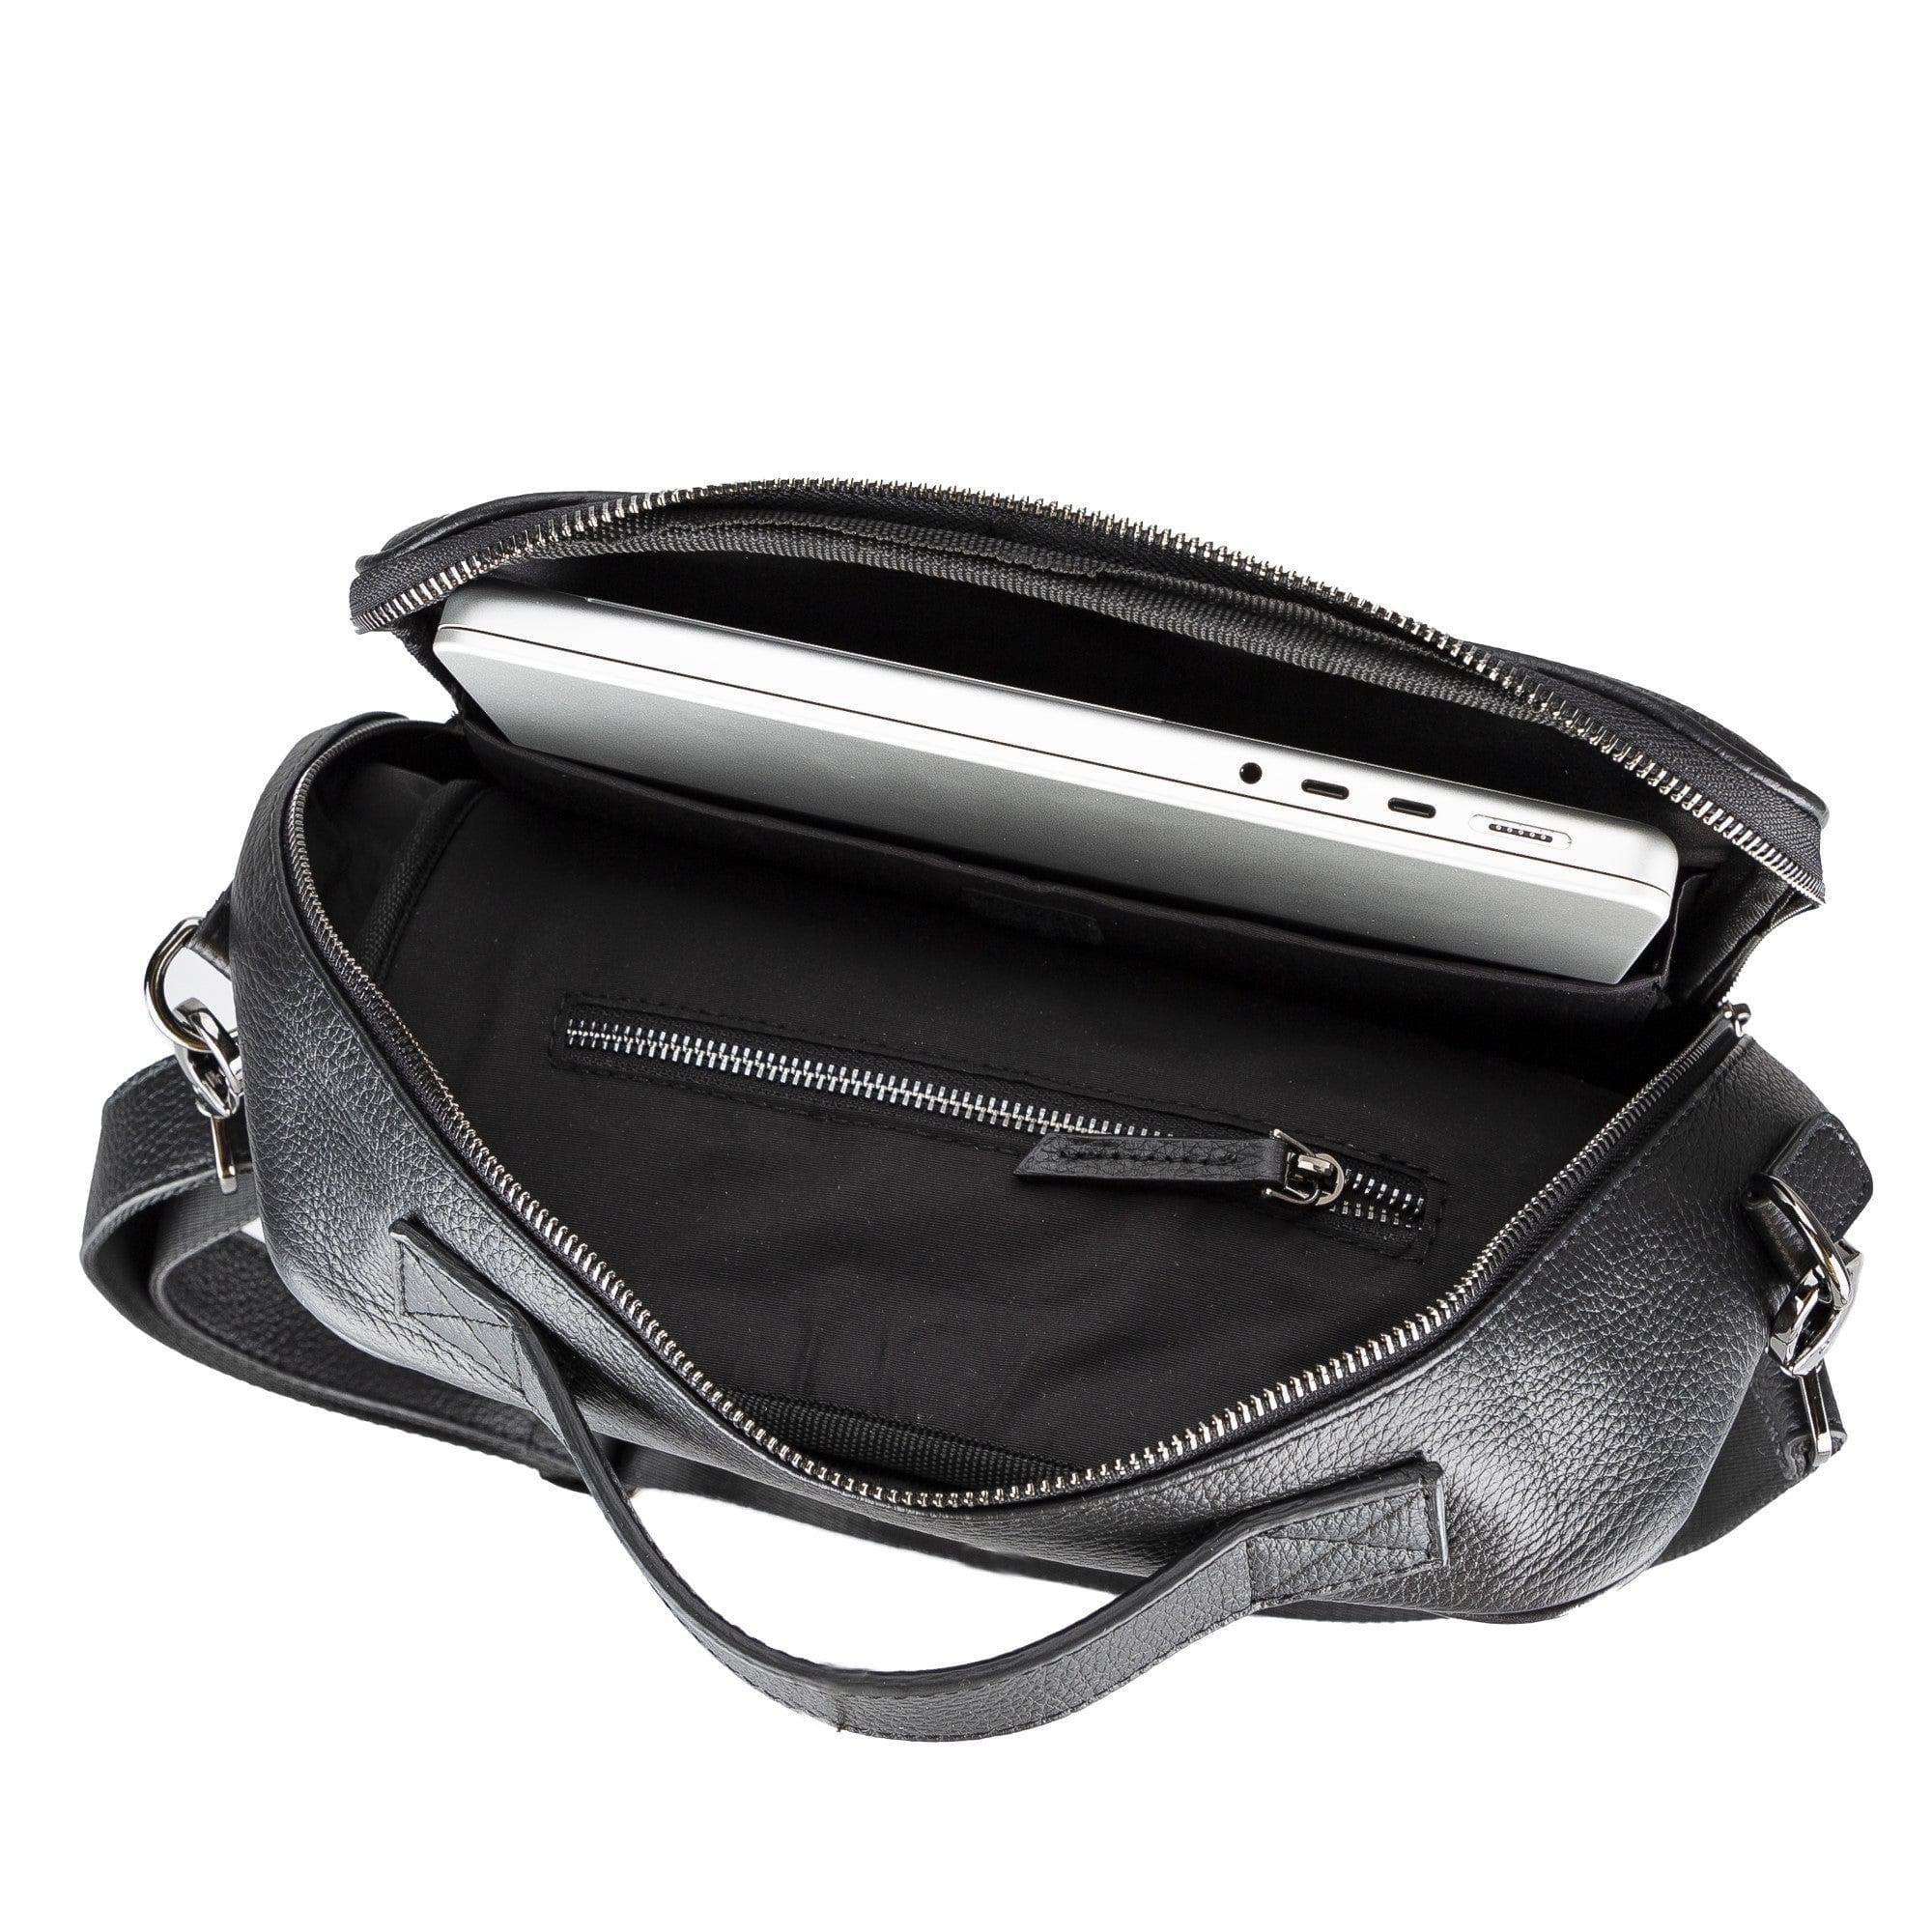 Elmira Leather Laptop Backpack for Men and Women - Black - TORONATA